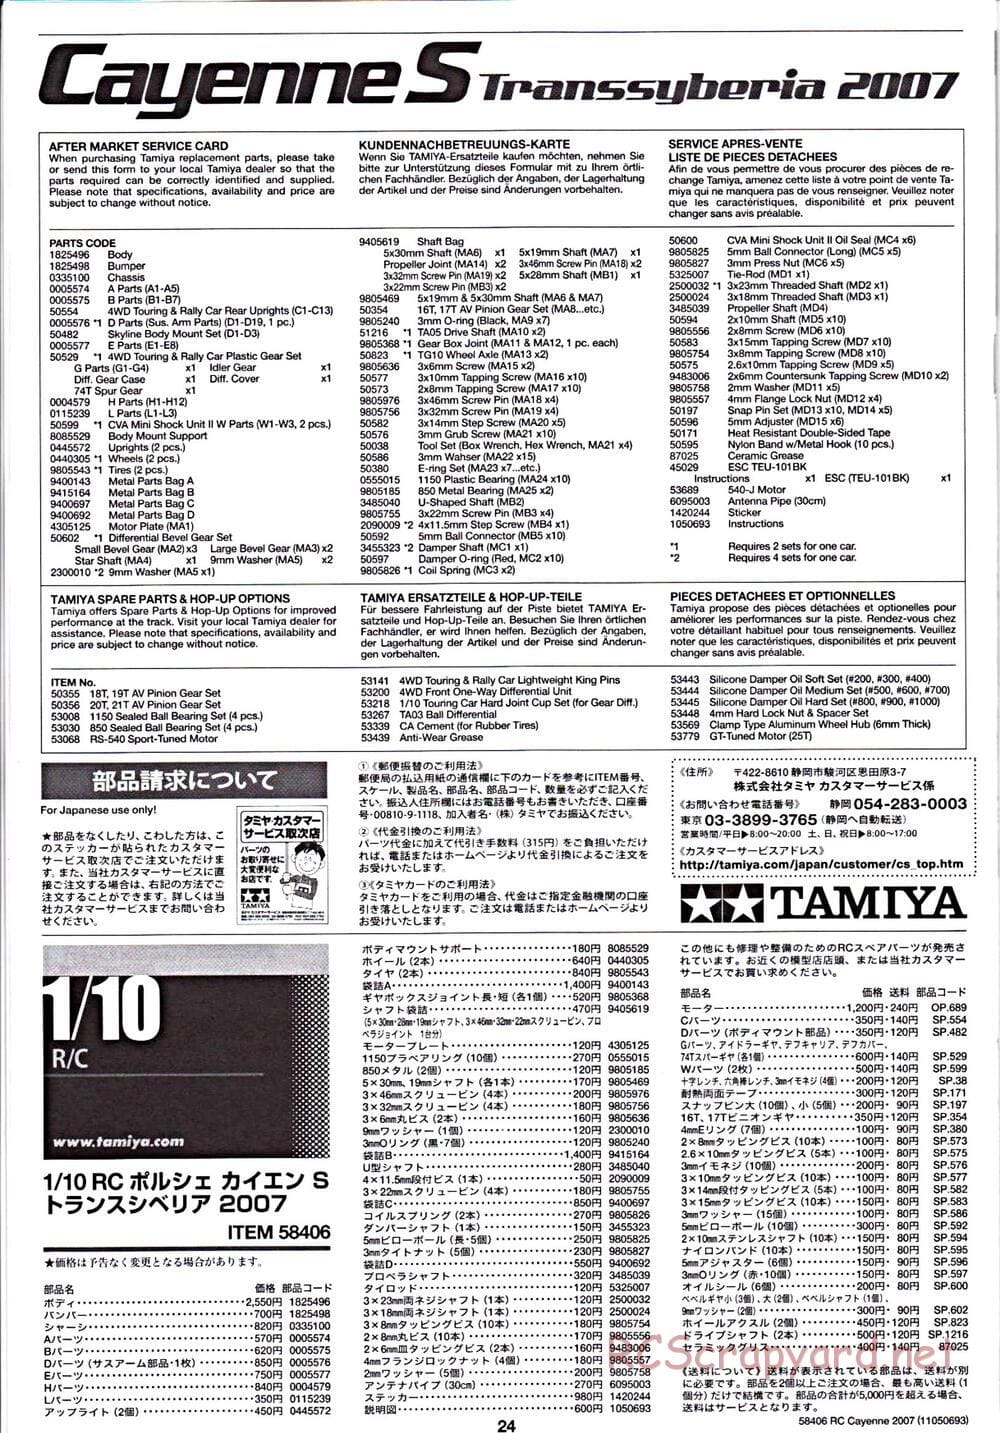 Tamiya - Cayenne S Transsyberia 2007 Chassis - Manual - Page 24